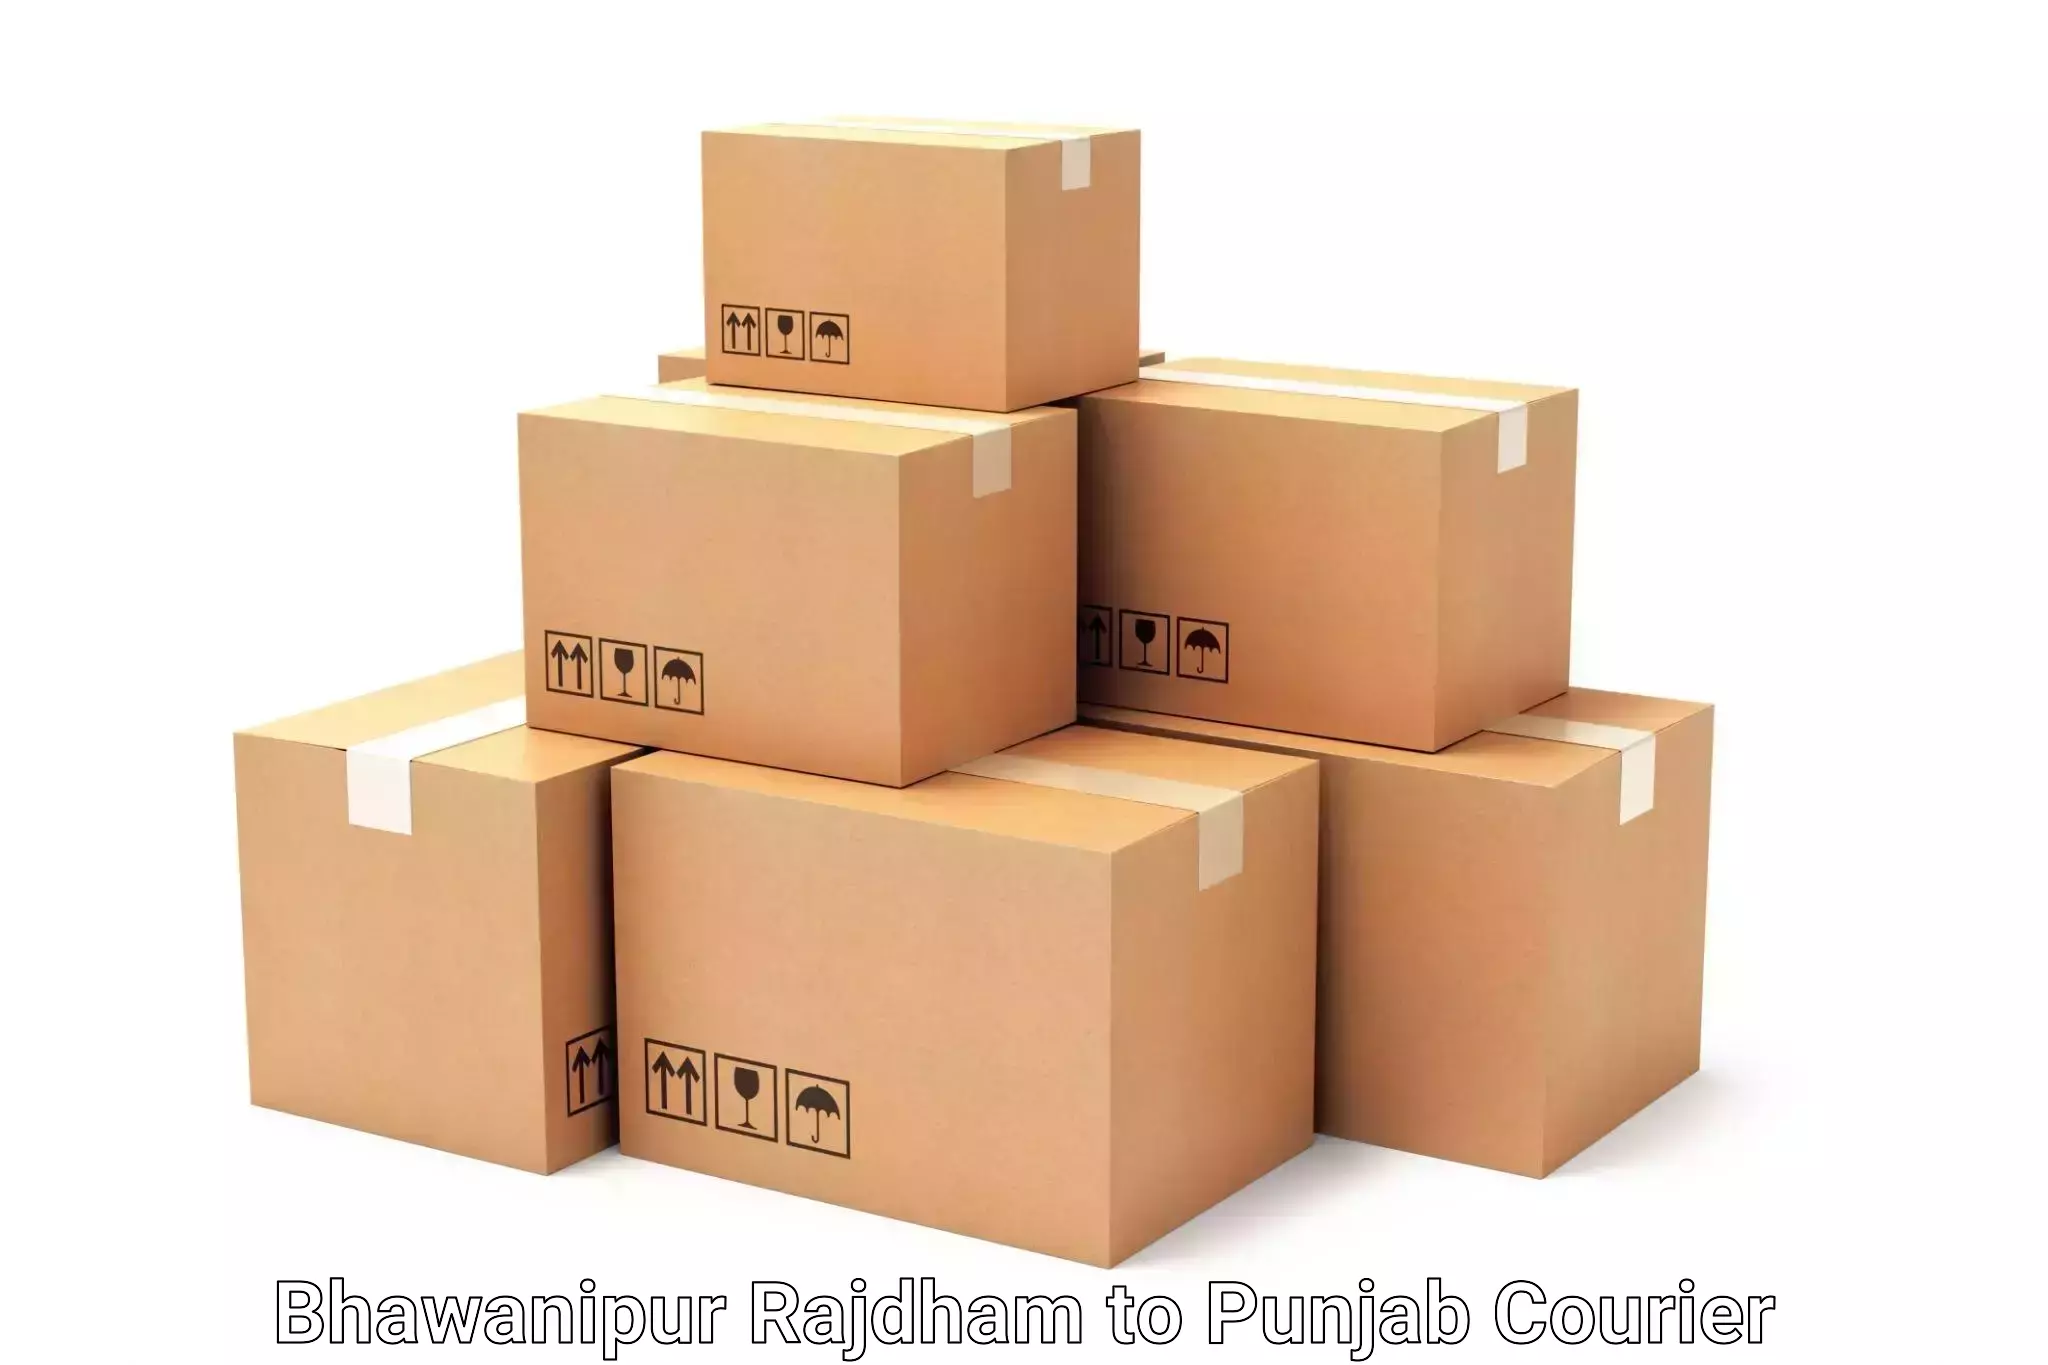 Luggage shipment specialists Bhawanipur Rajdham to Punjab